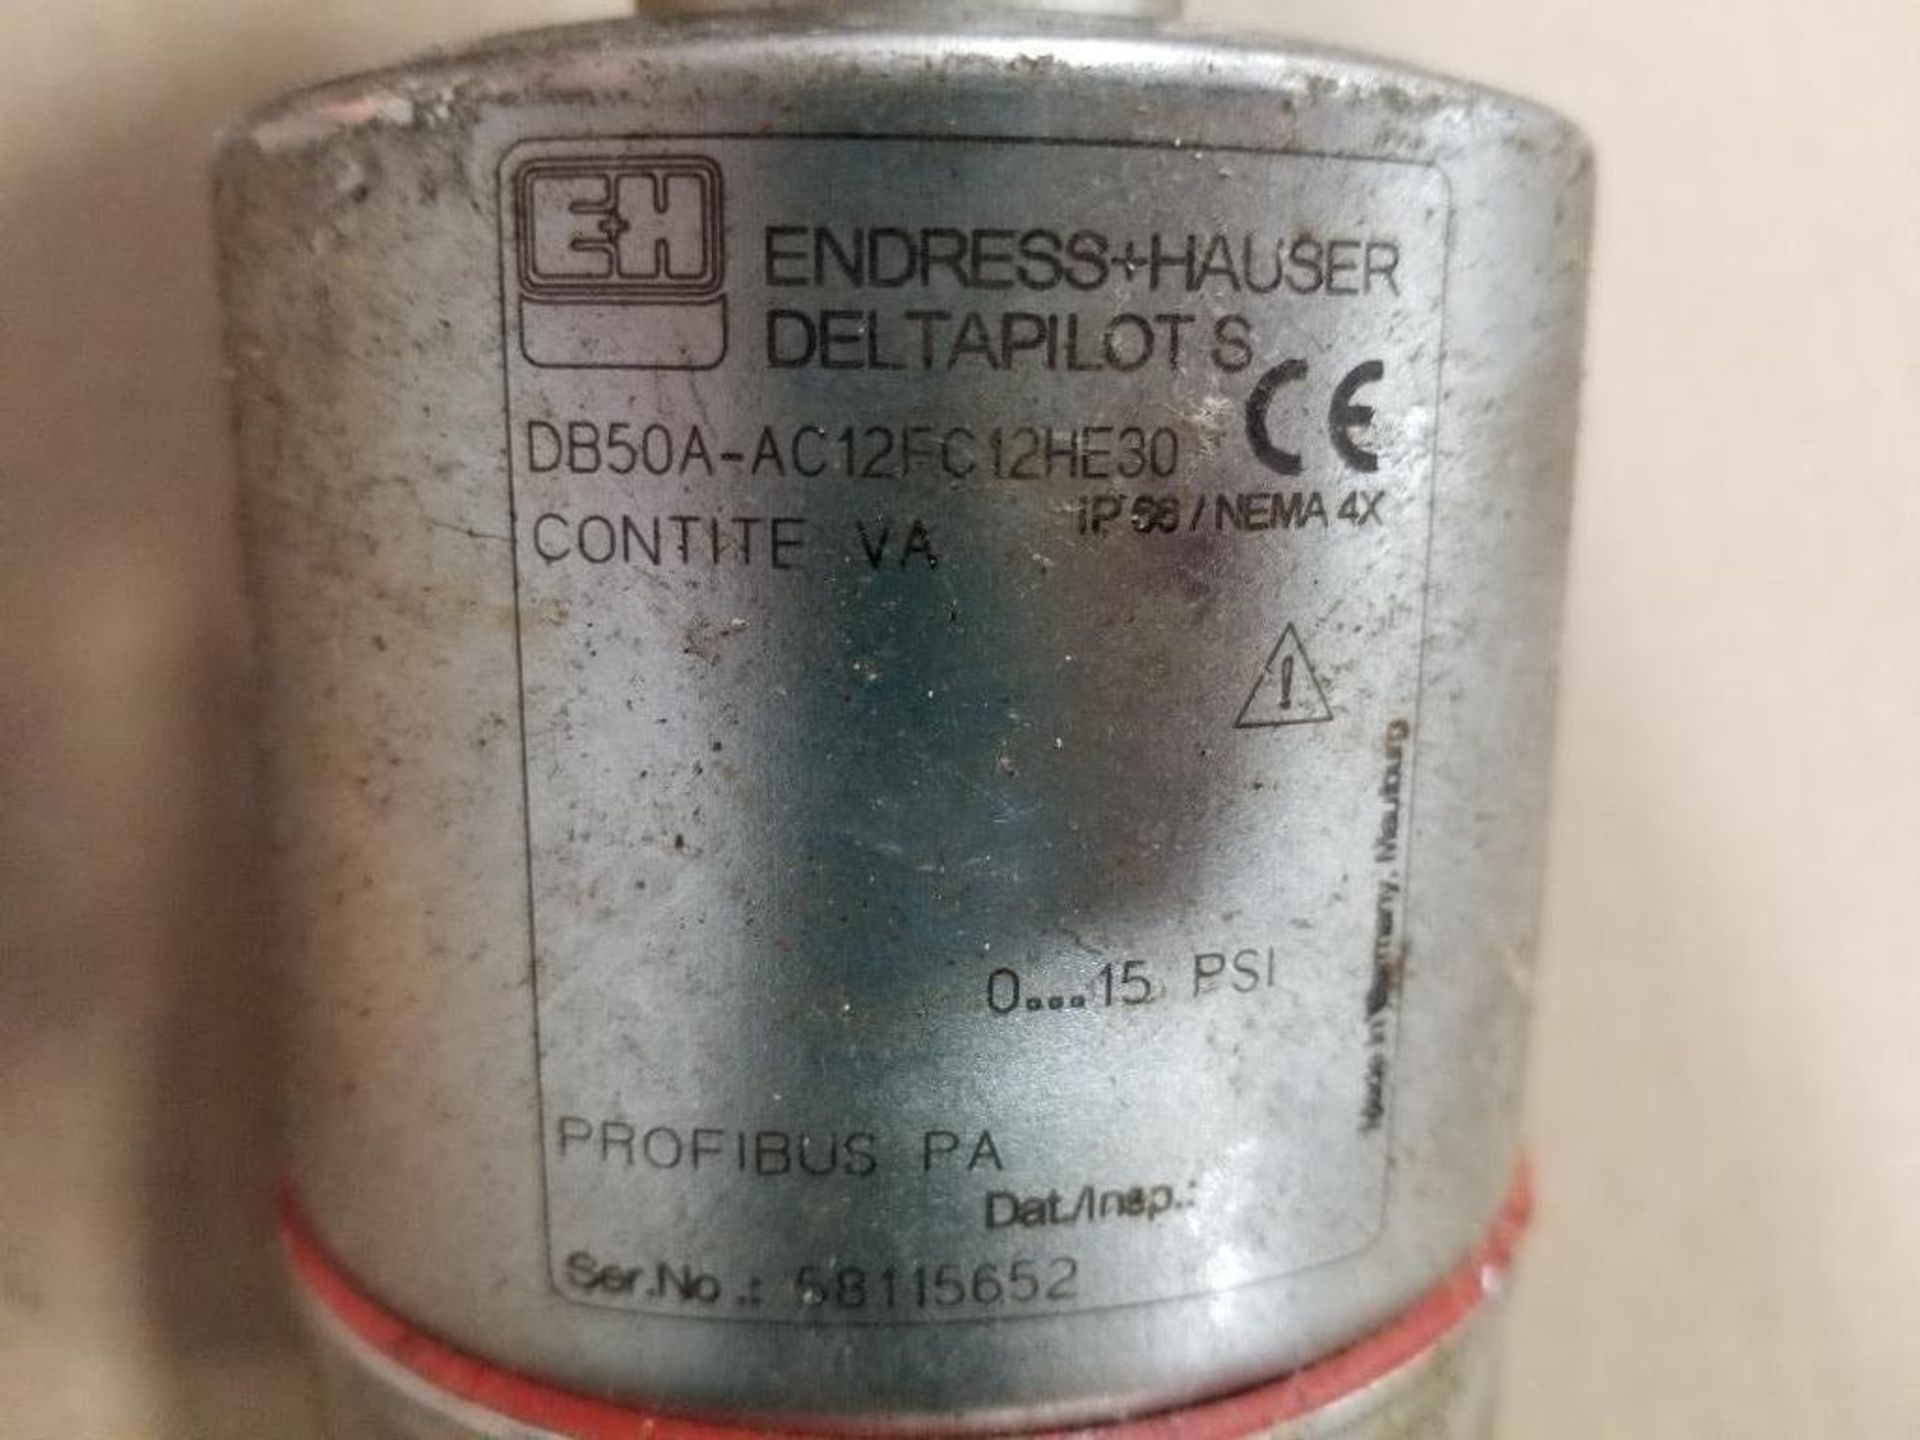 Endress+Hauser deltapilot S level transmitter. Model DB50A-AC12FC12HE30. - Image 2 of 3